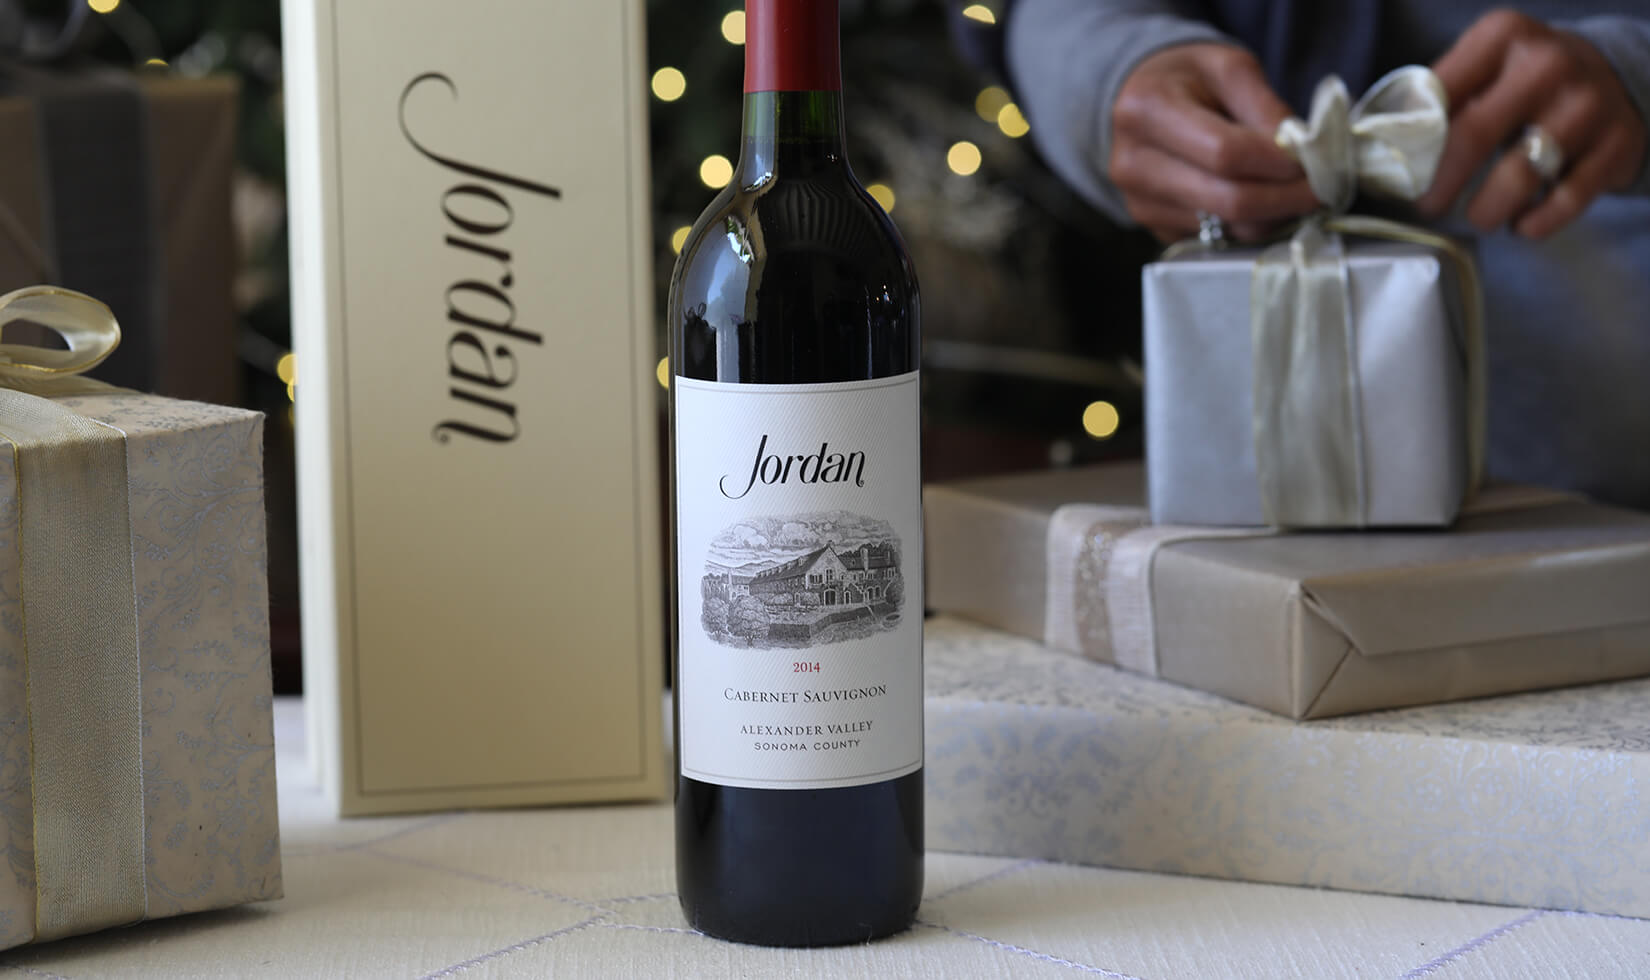 Jordan Cabernet Sauvignon wine gift box with present wrapping